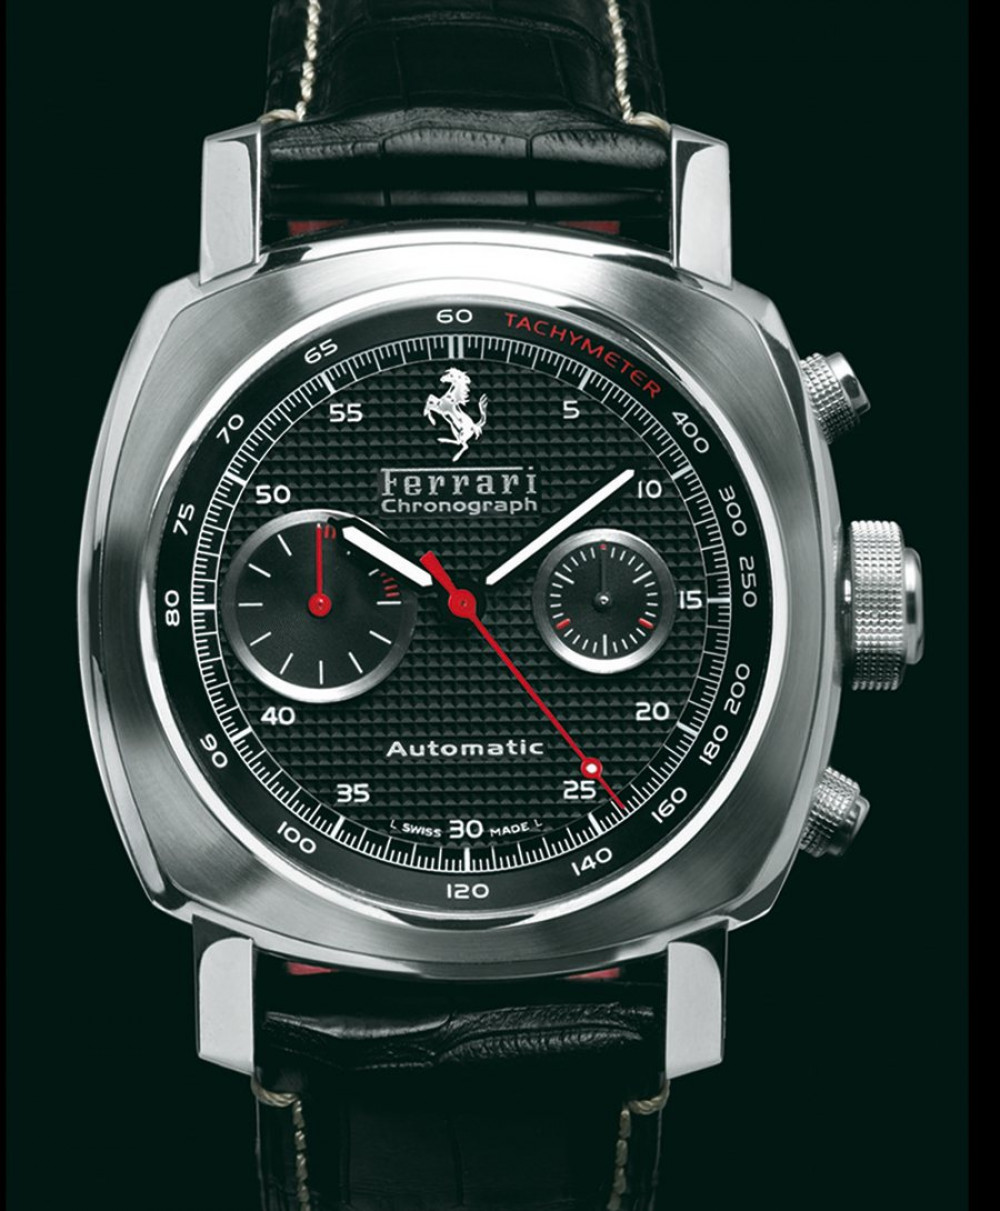 Zegarek firmy Ferrari - Engineered by Officine Panerai, model Granturismo Chronograph